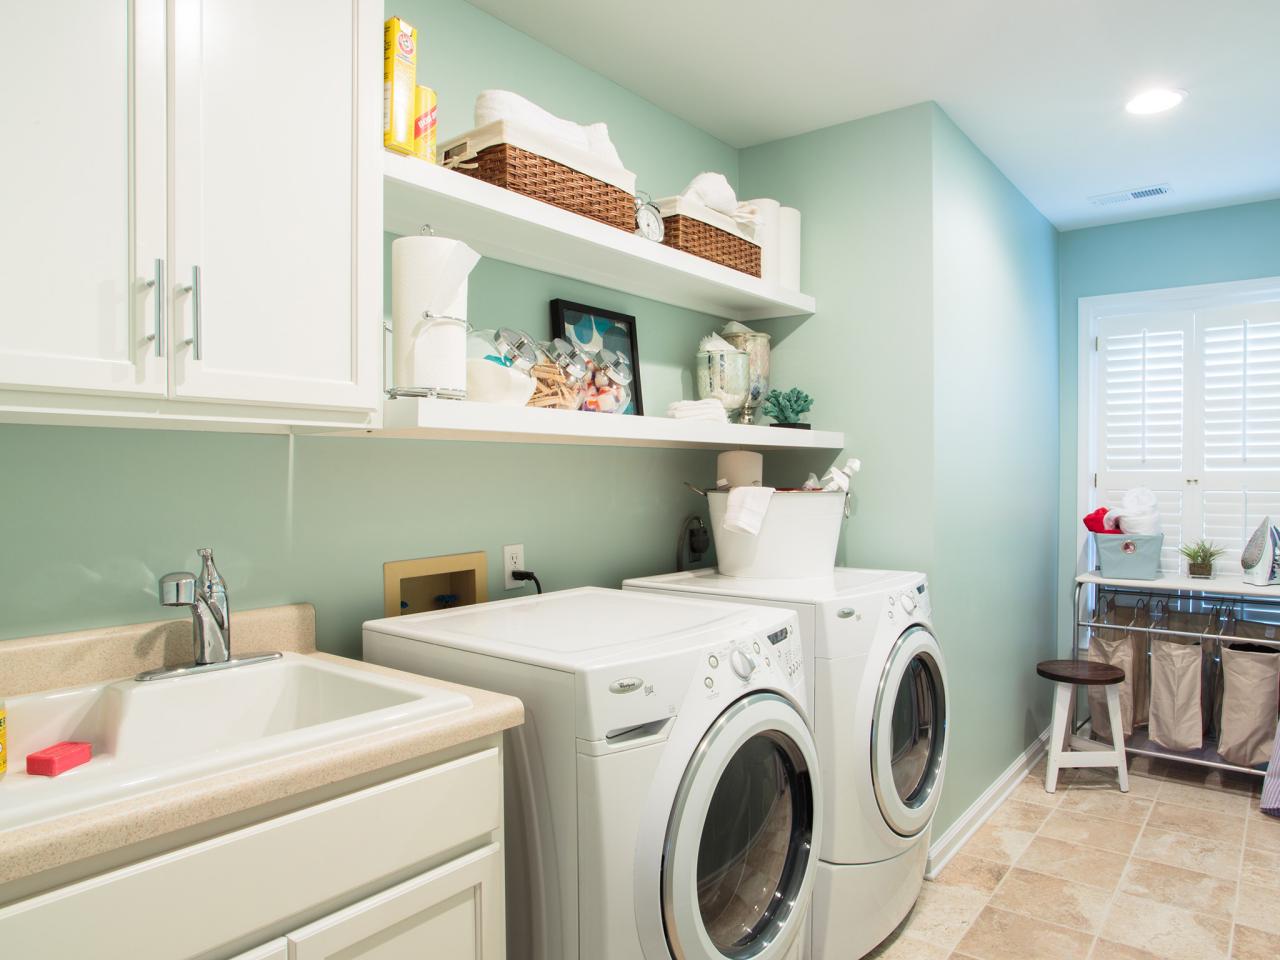 Area servis yang meliputi dapur, ruang cuci dan setrika